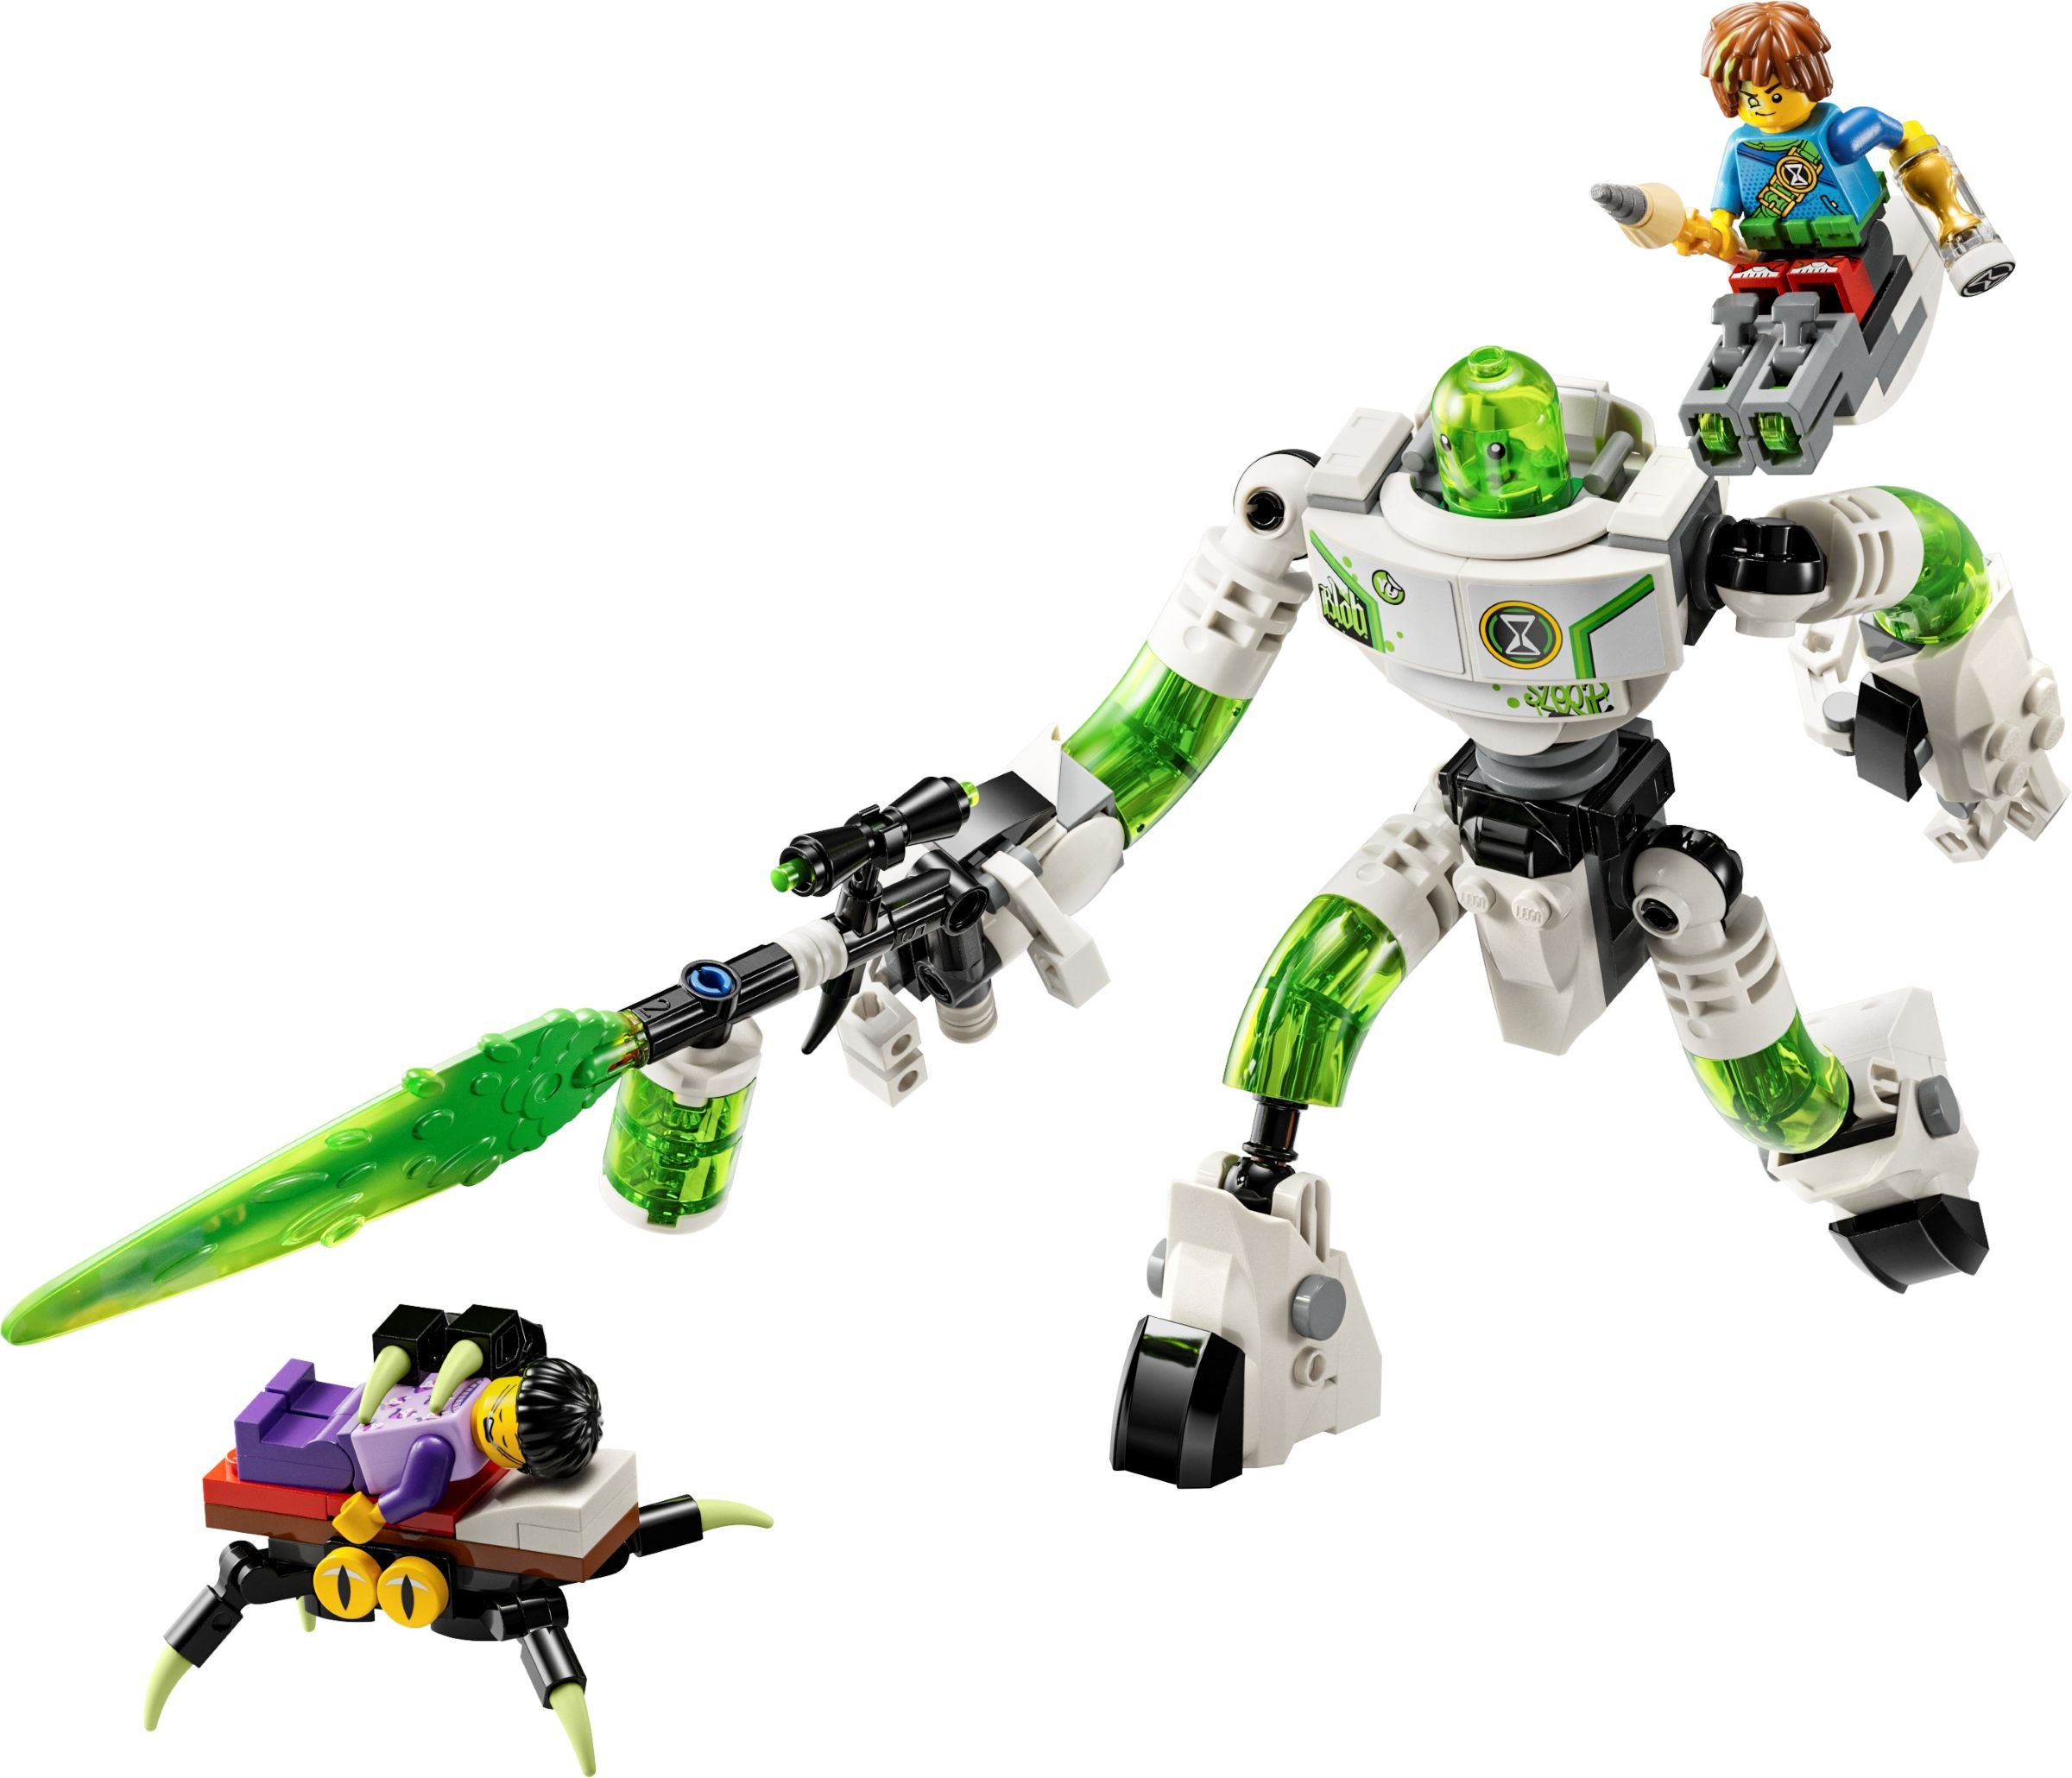 LEGO Dreamzzz 71454 Mateo und Roboter Z-Blob